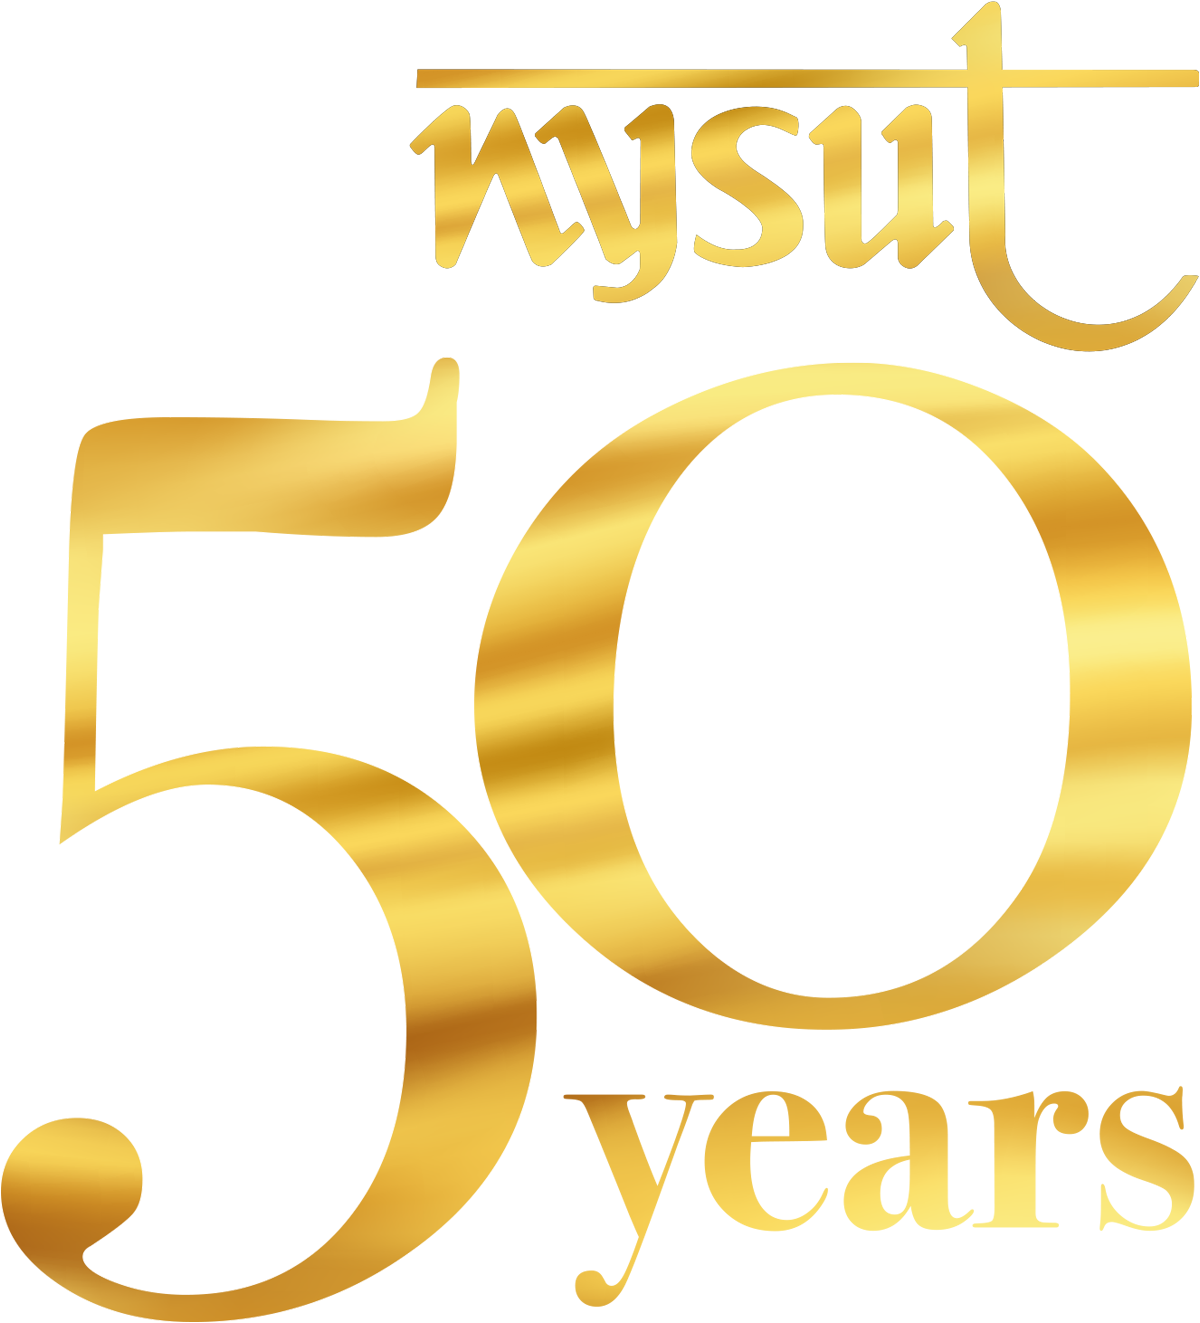 NYSUT 50 Years typography